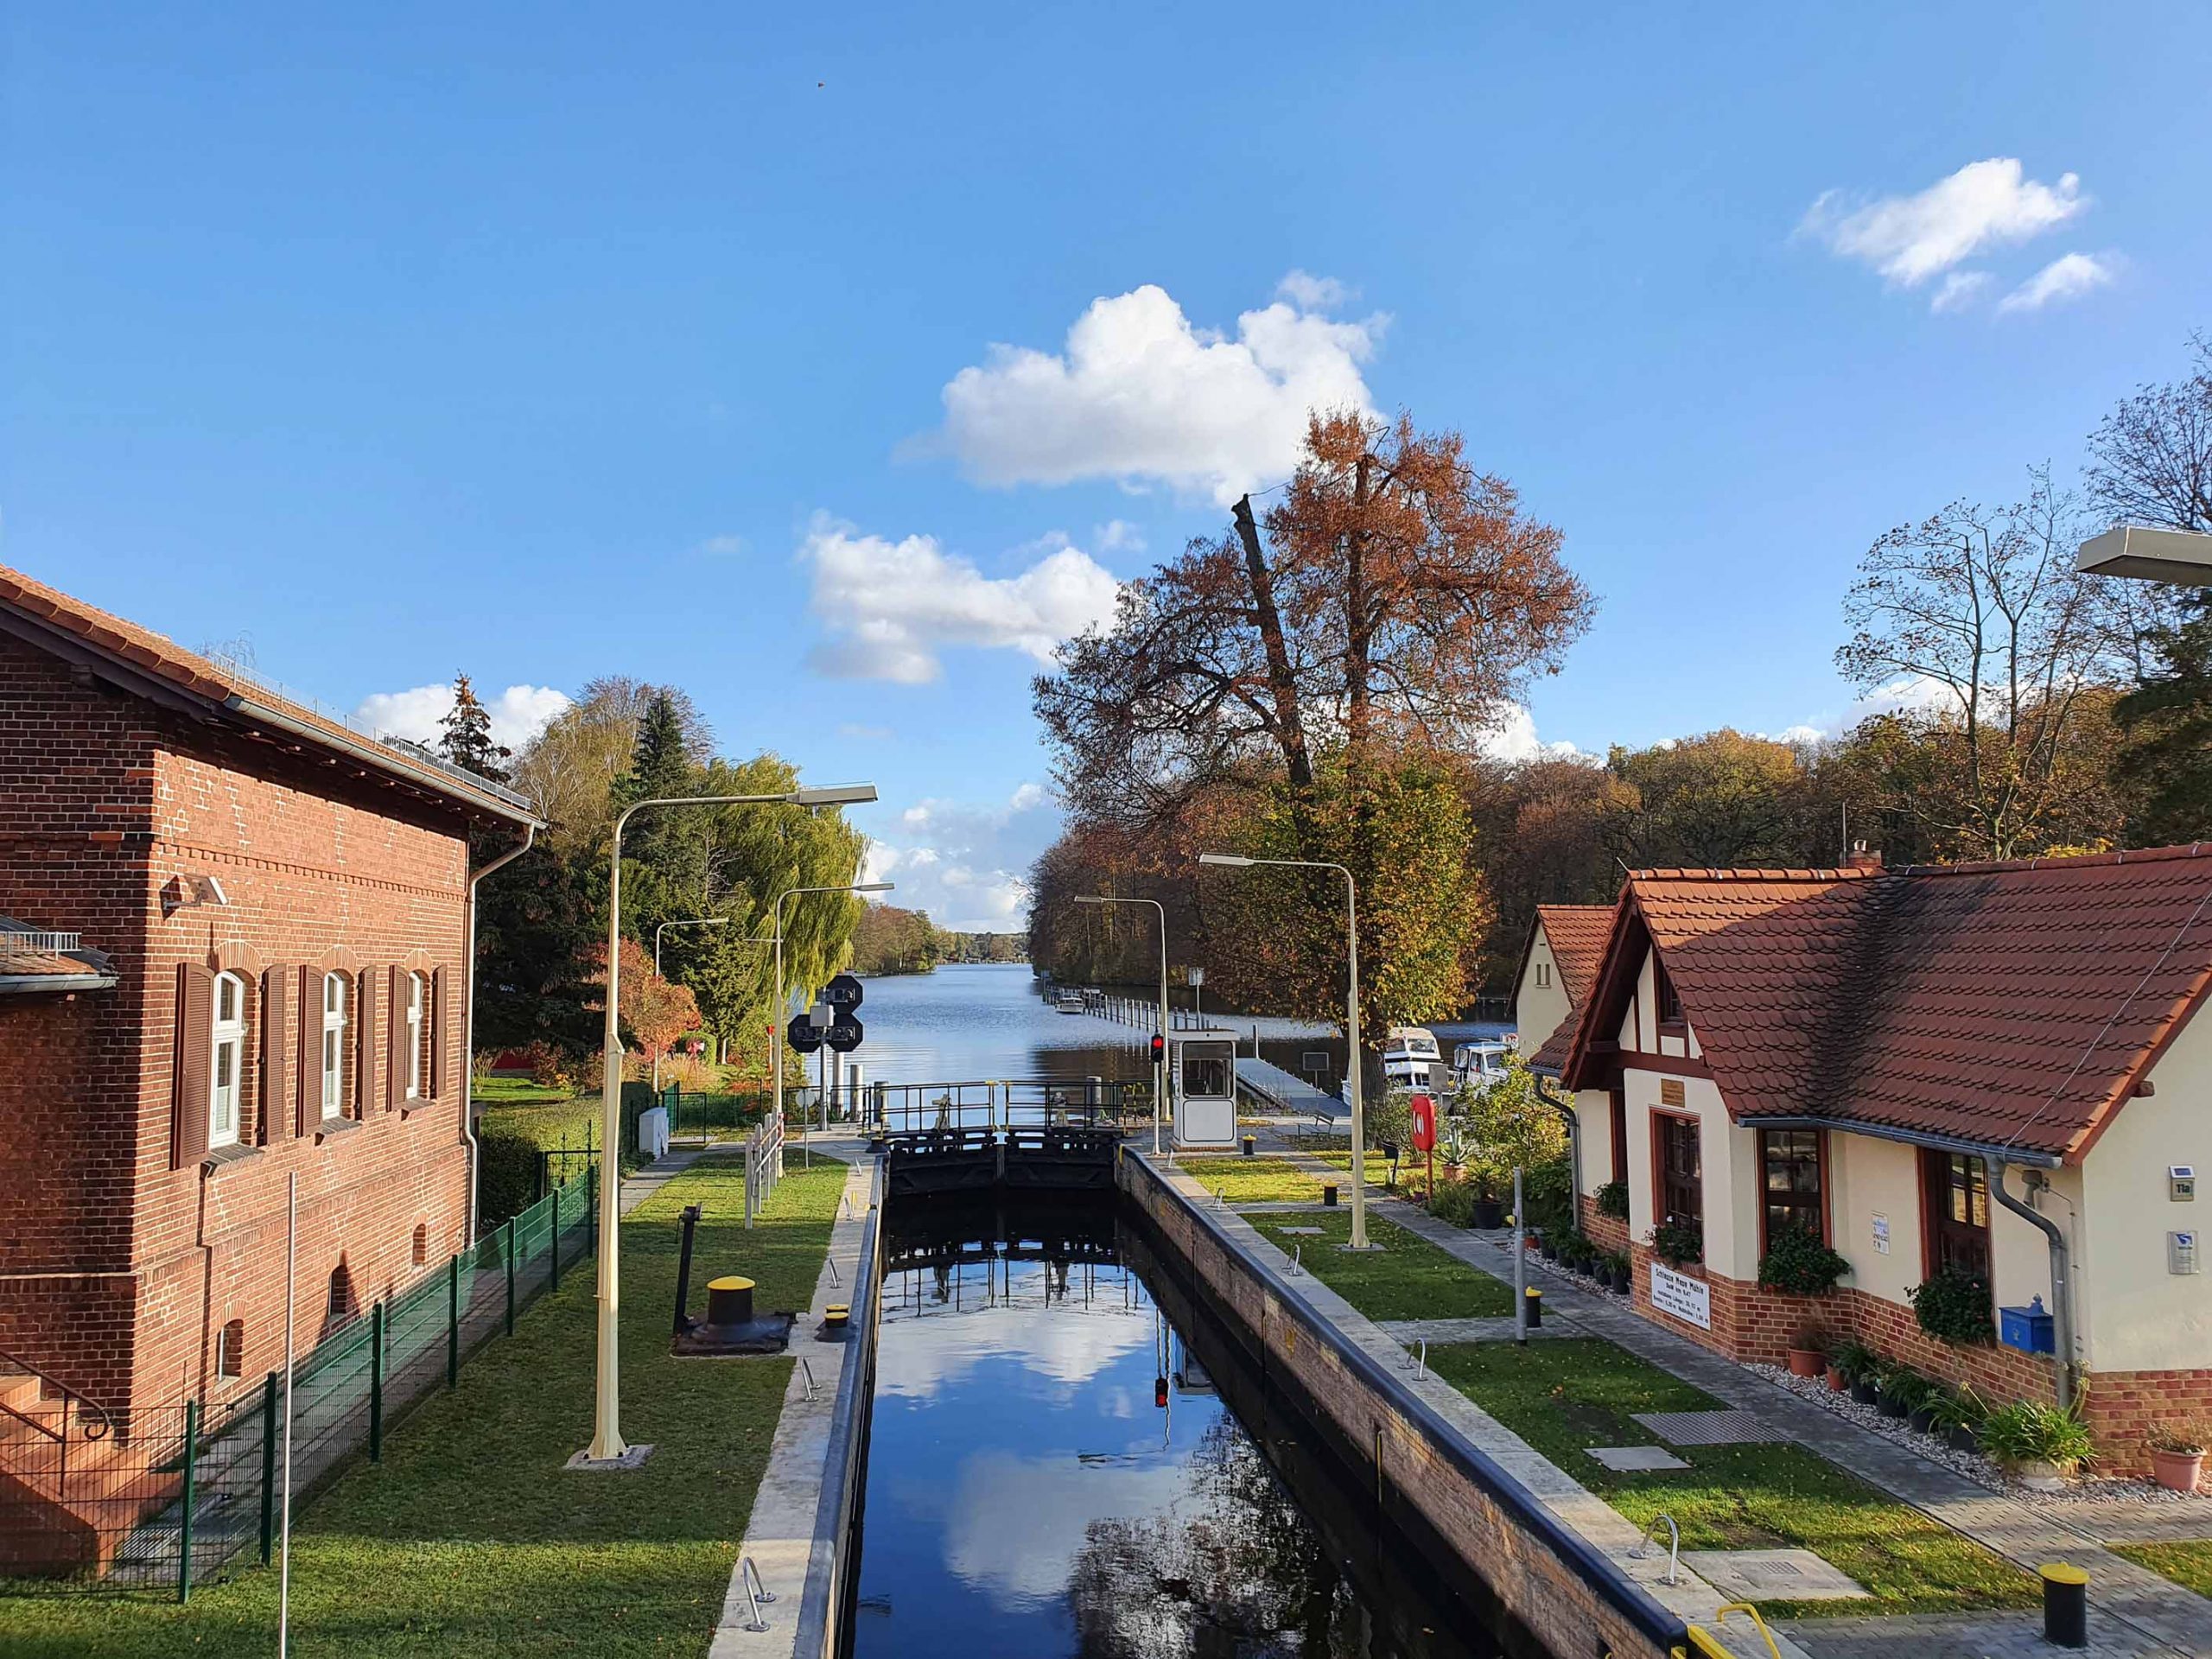 Schleuse "Neue Mühle" in Königswusterhausen